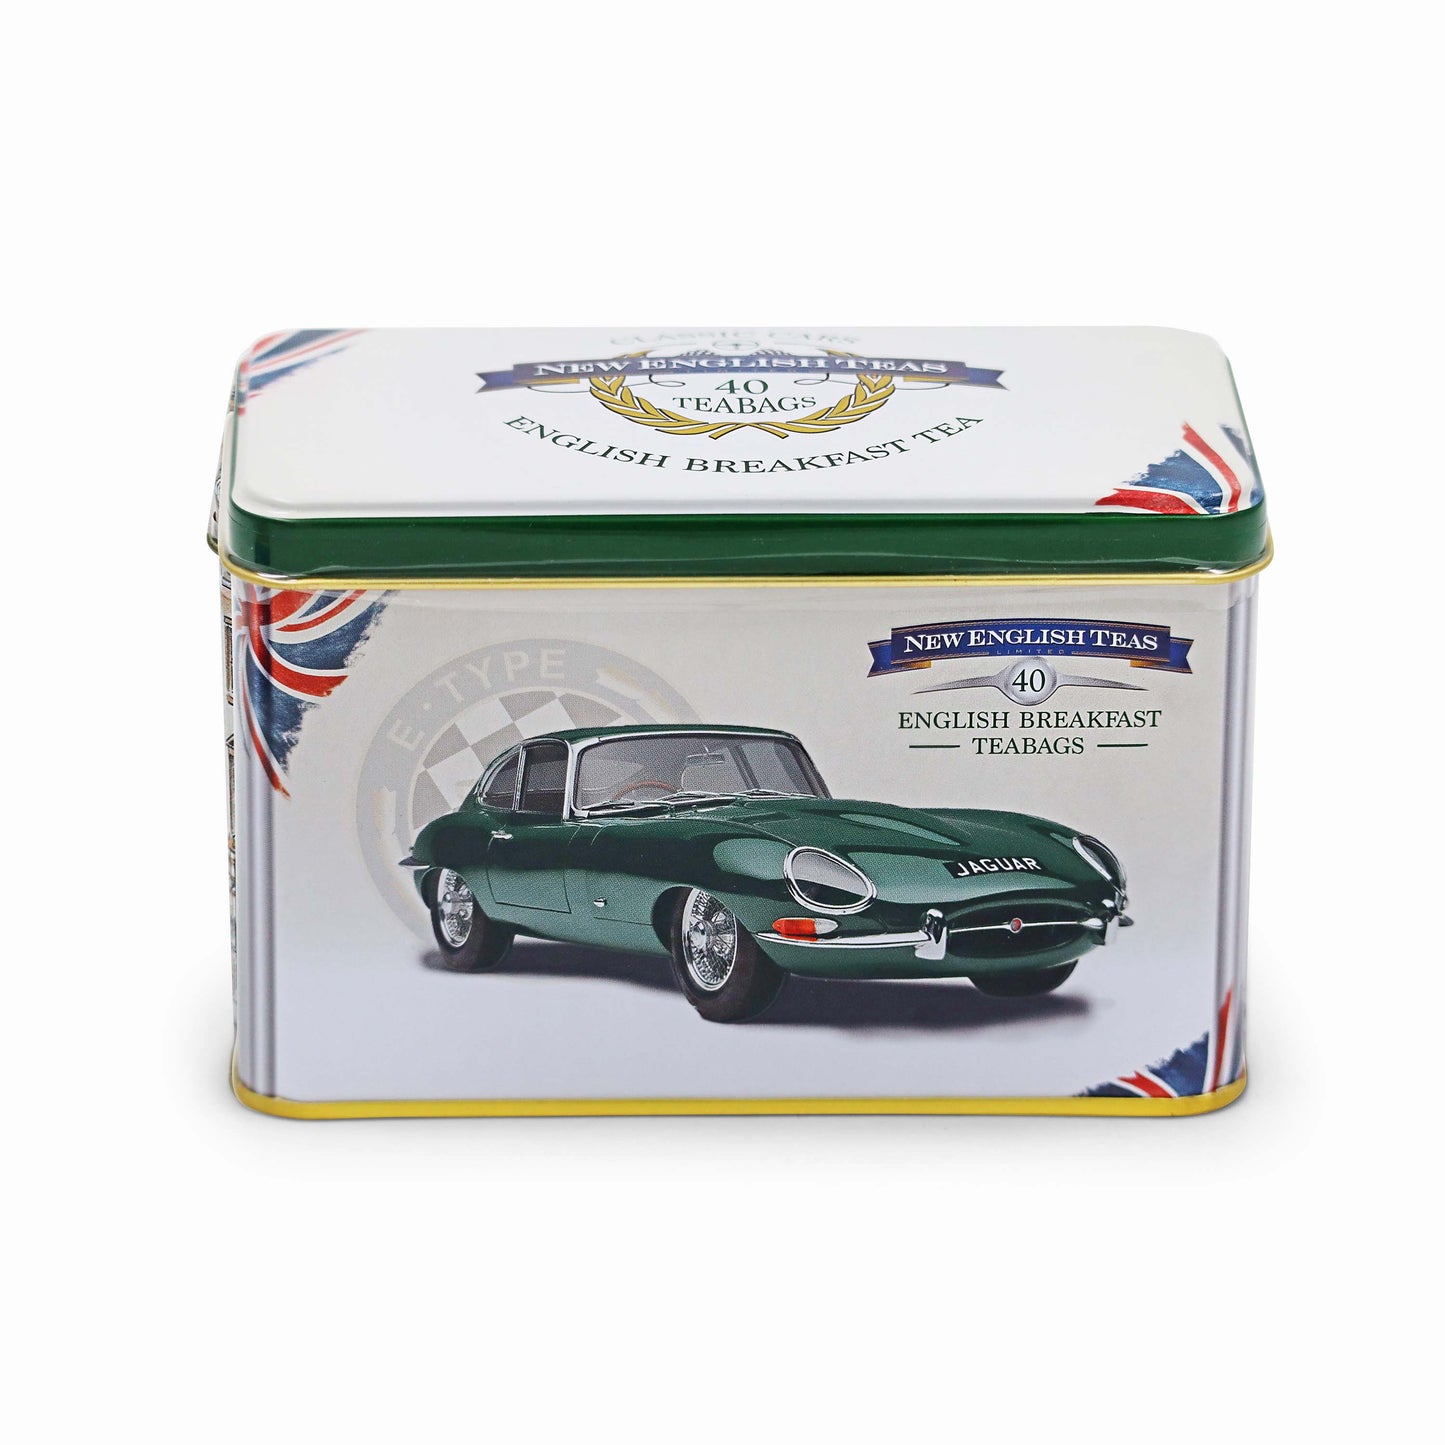 Classic Jaguar E-Type Tea Caddy Gift